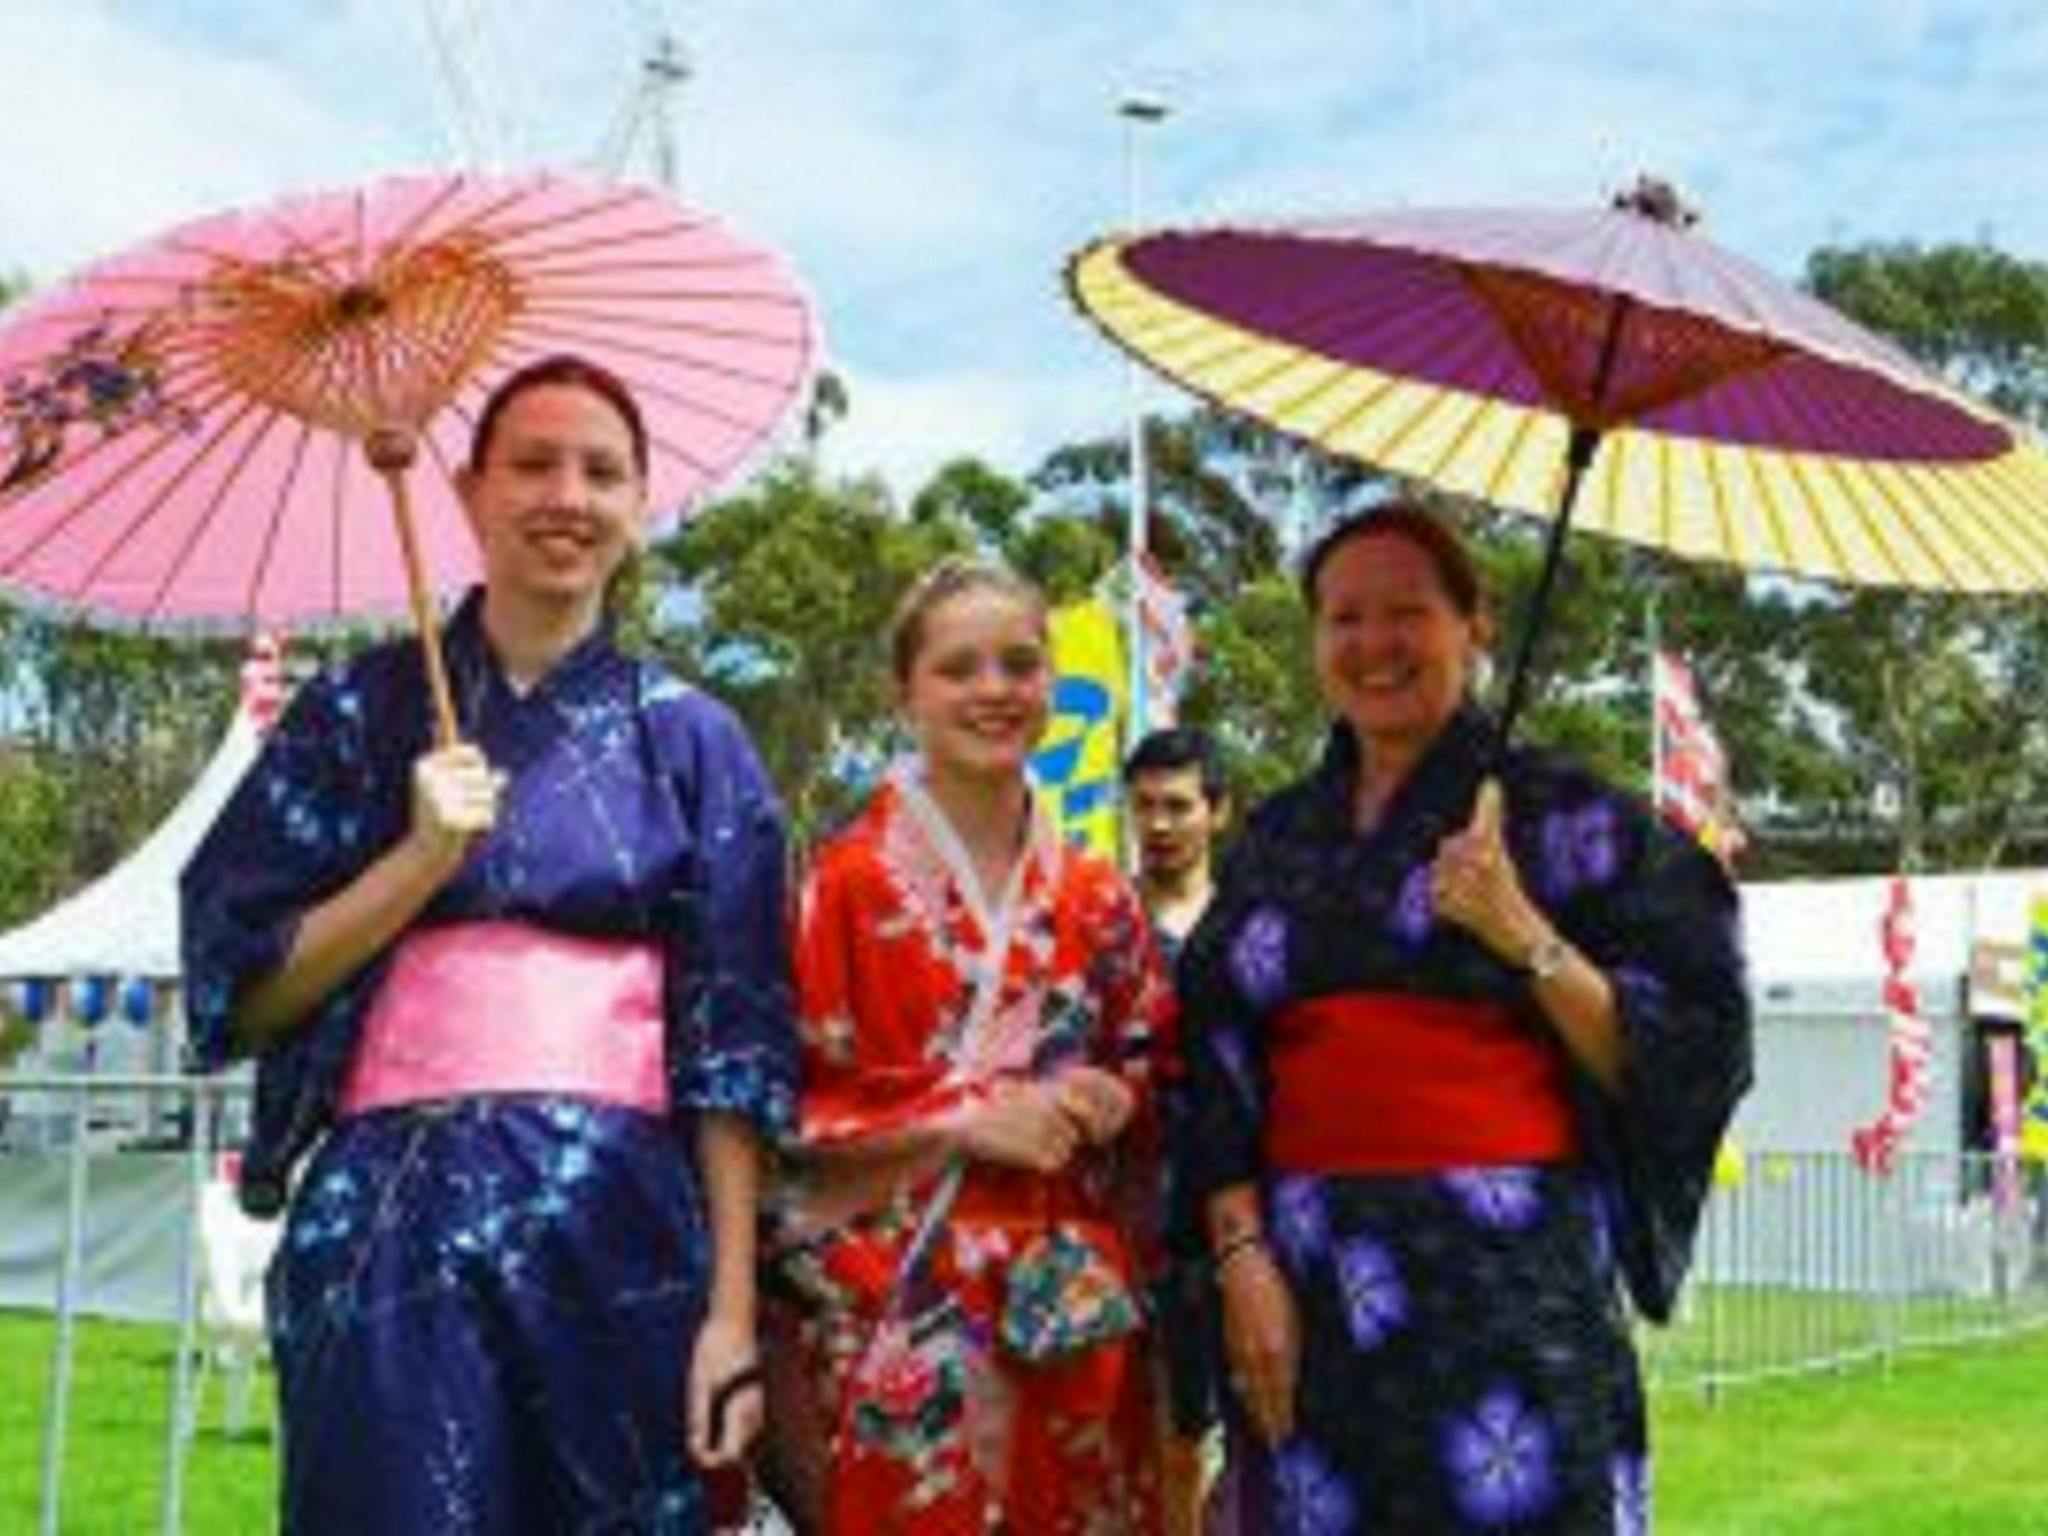 Matsuri Japan Festival in Parramatta